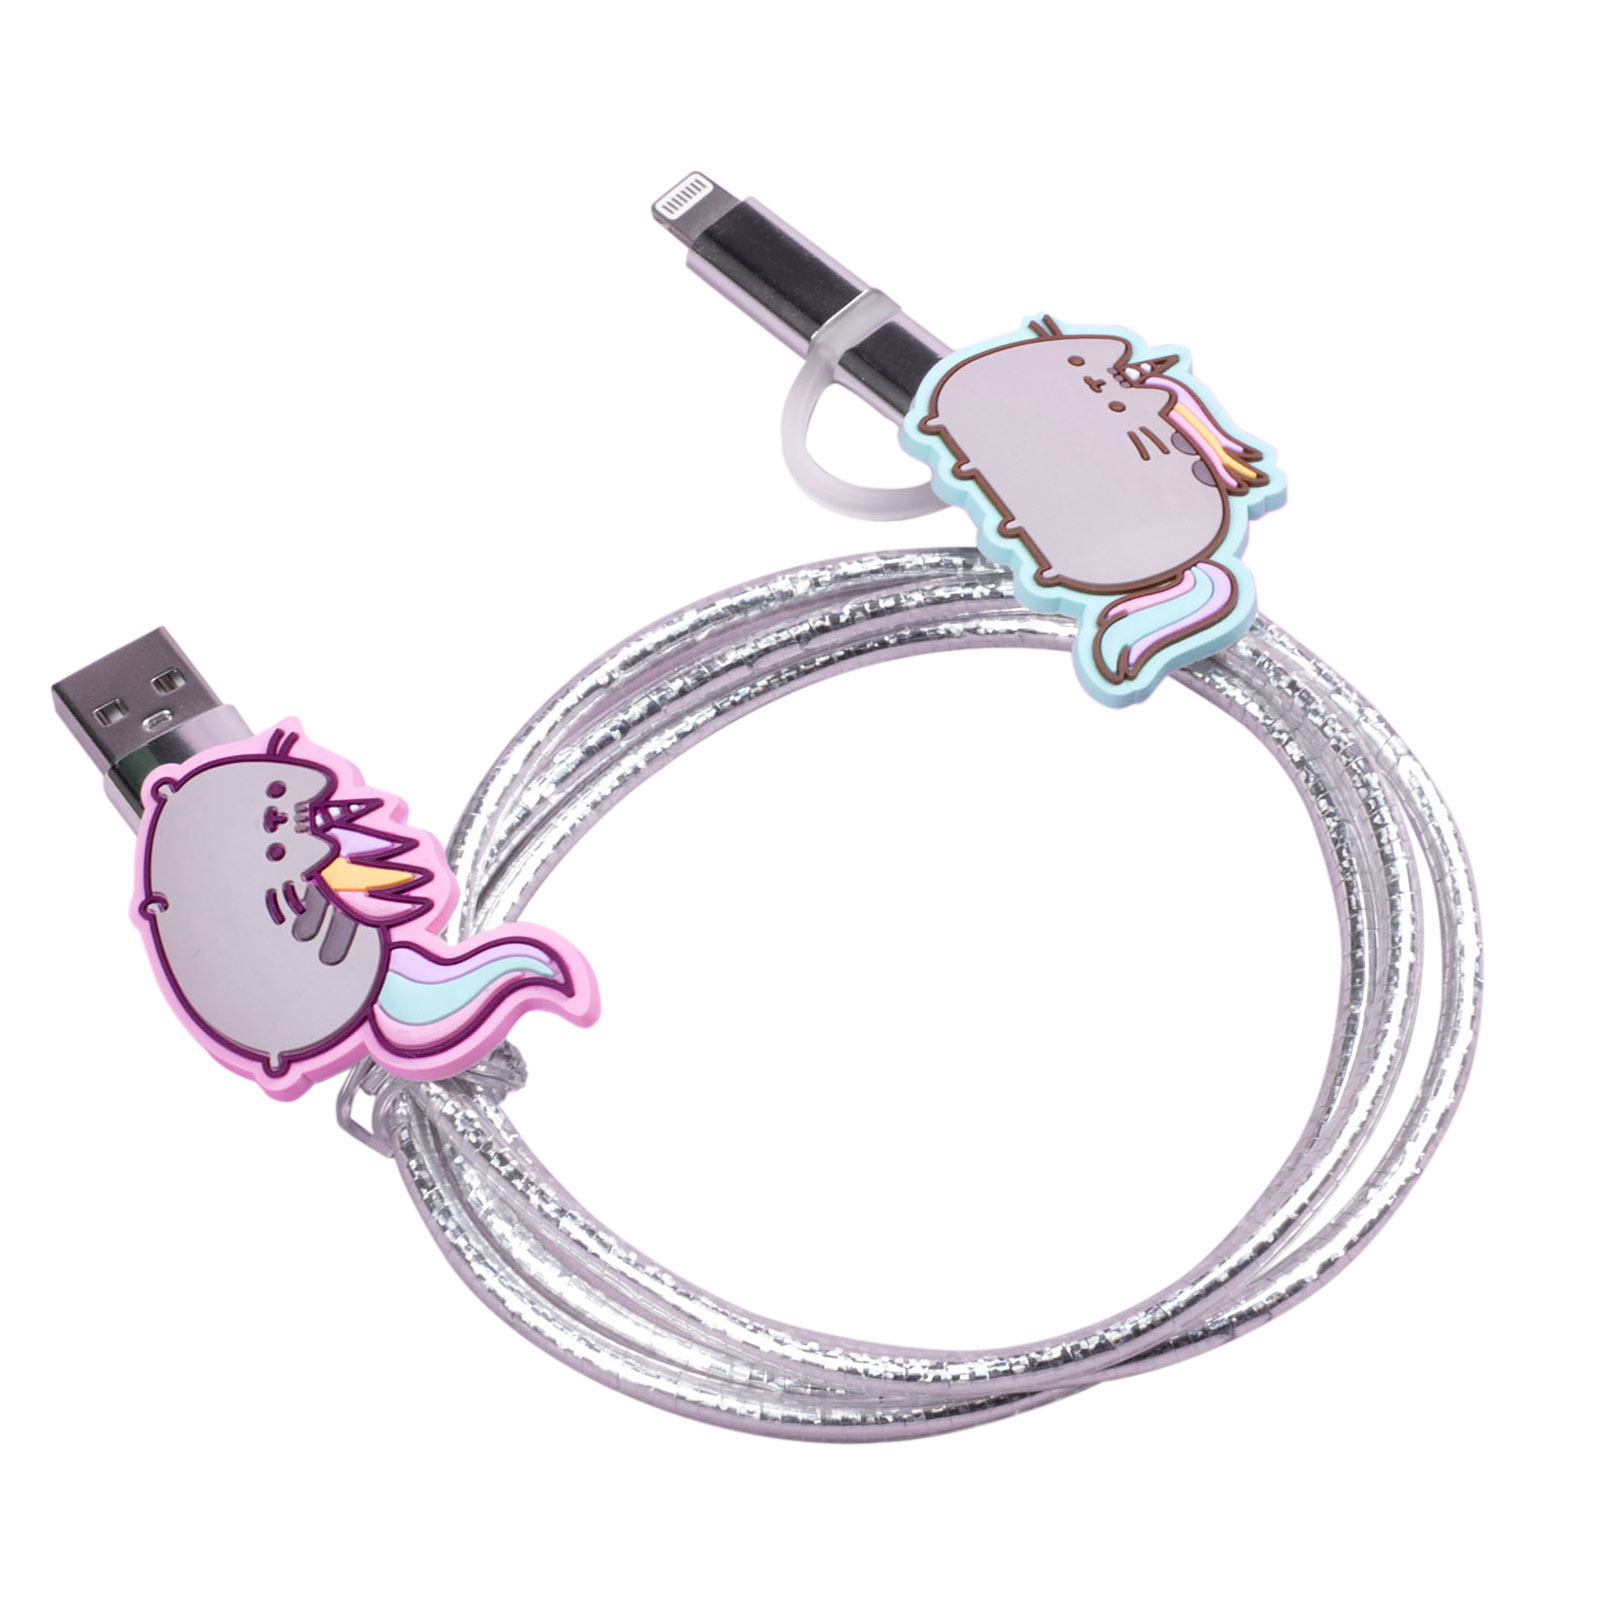 Pusheen - Unicorn USB Charging Cable